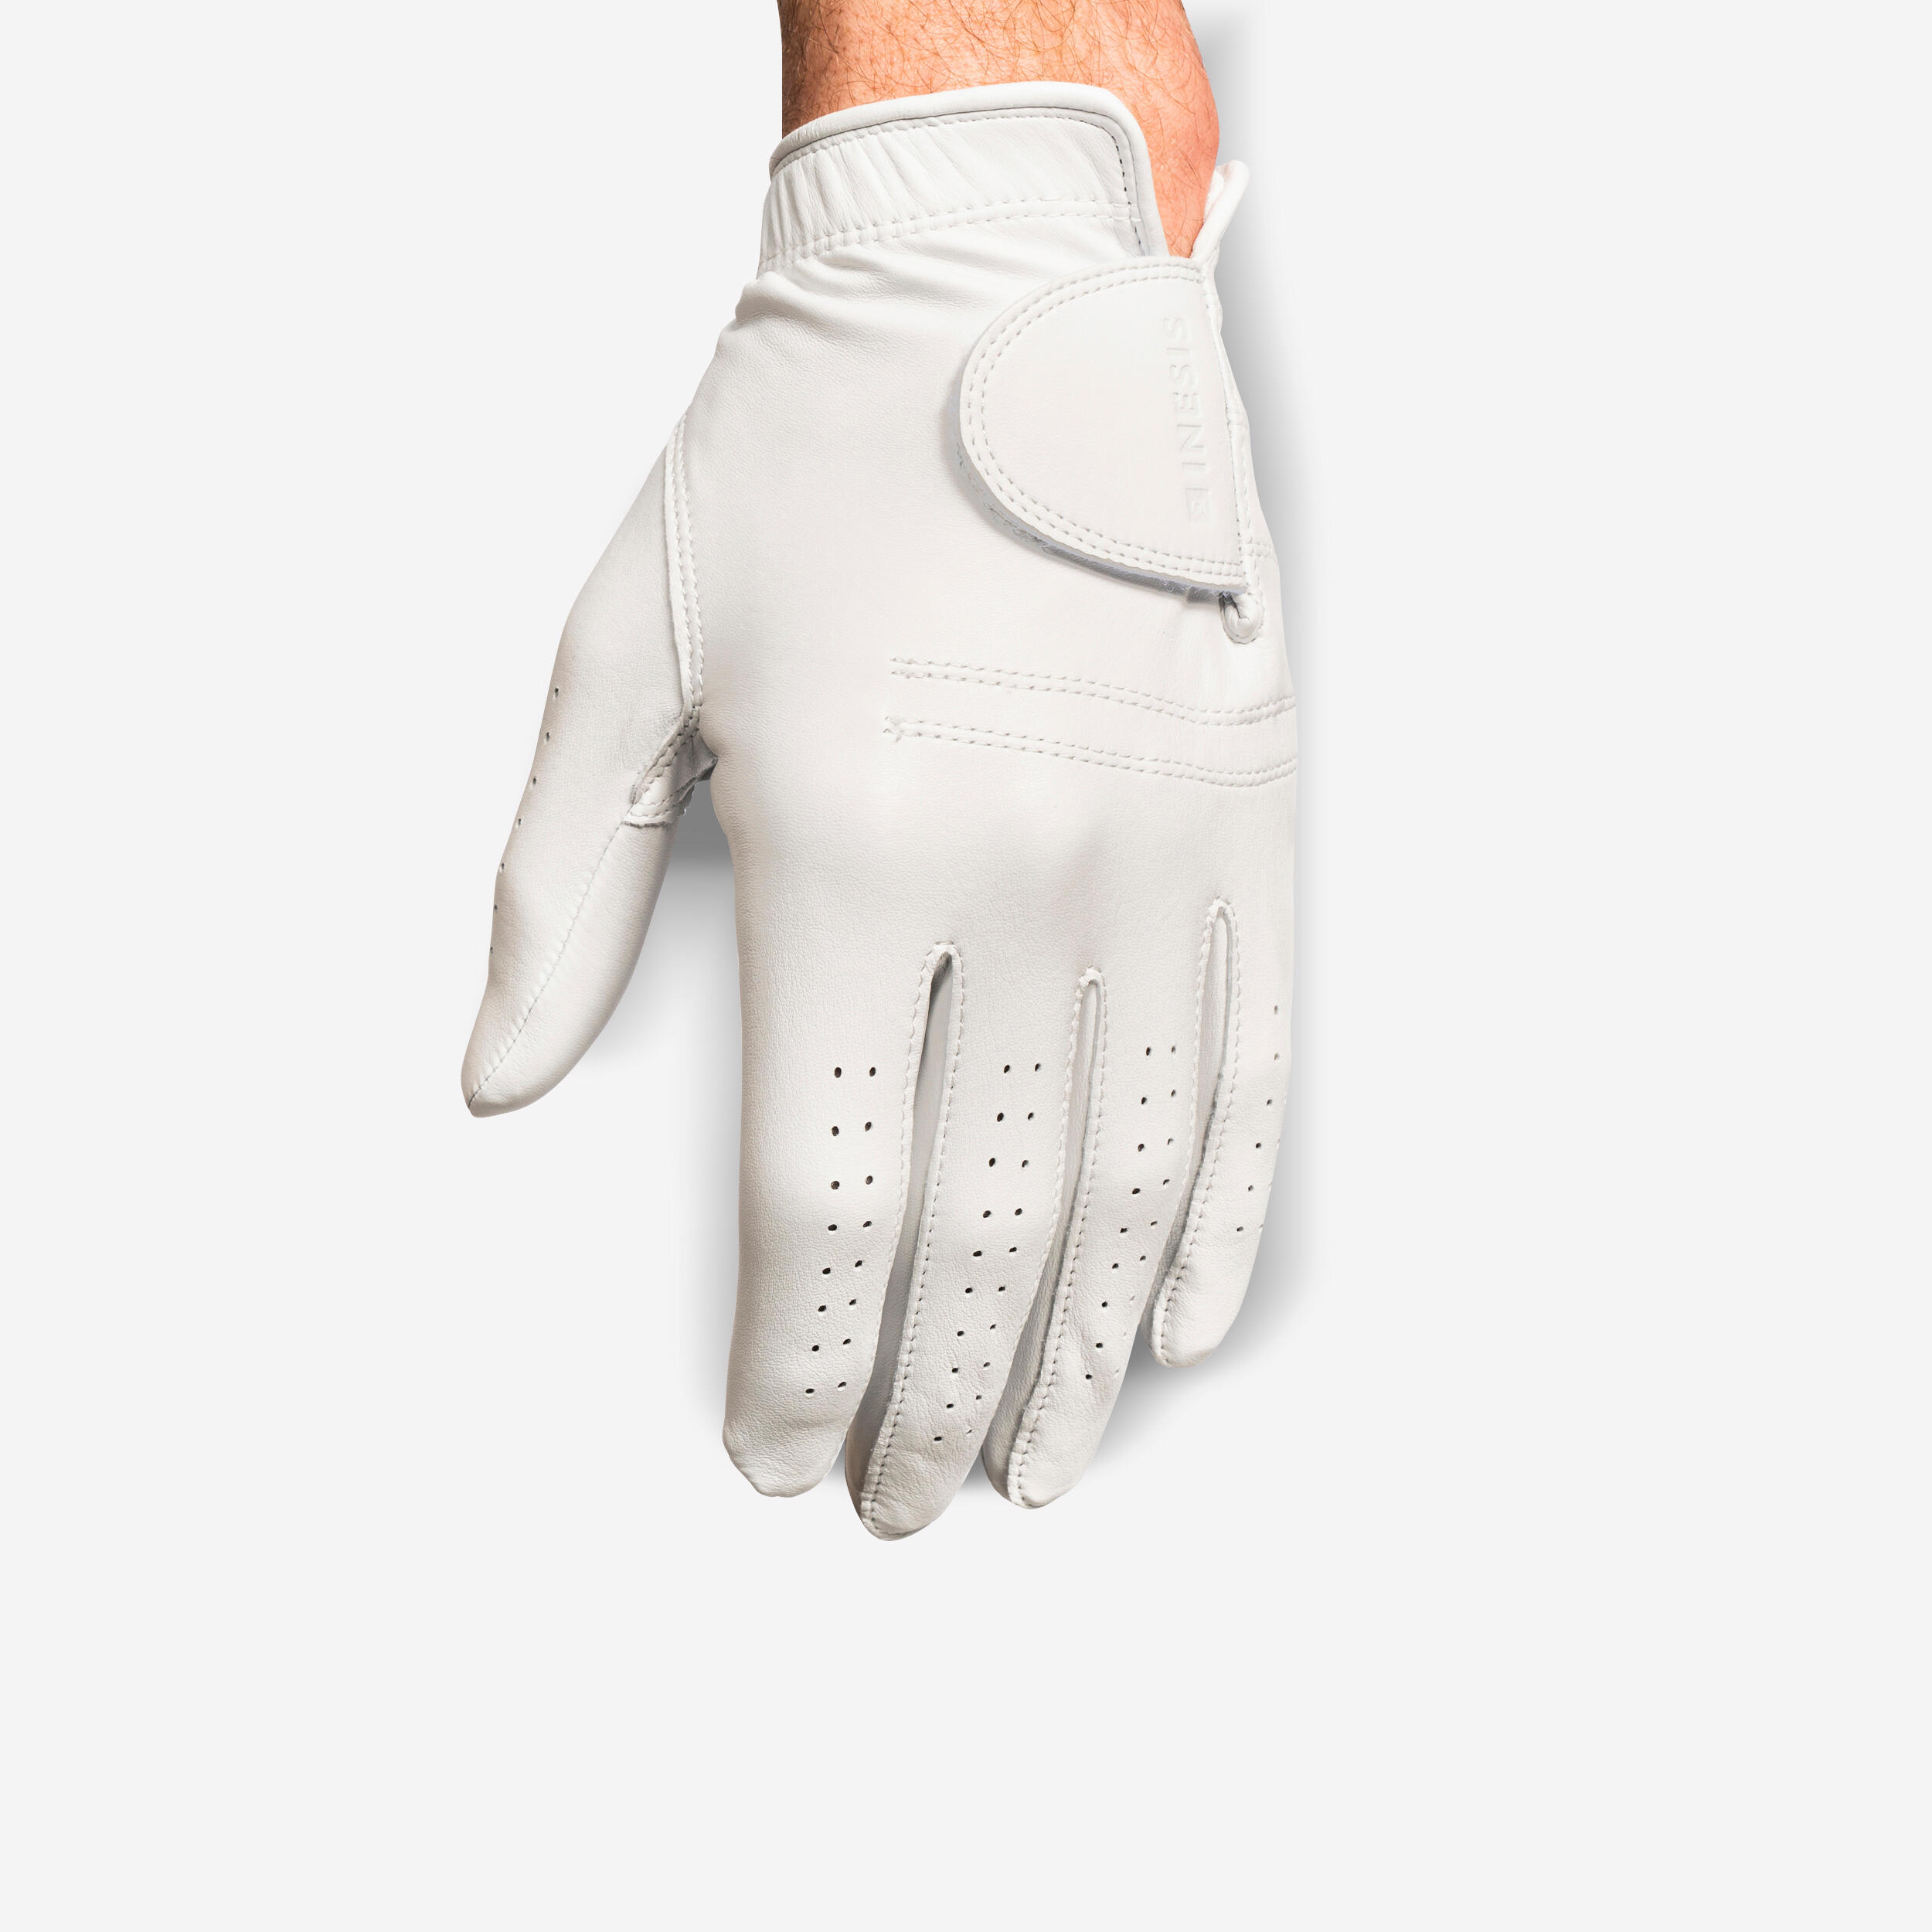 Men’s RH Cabretta Golf Glove